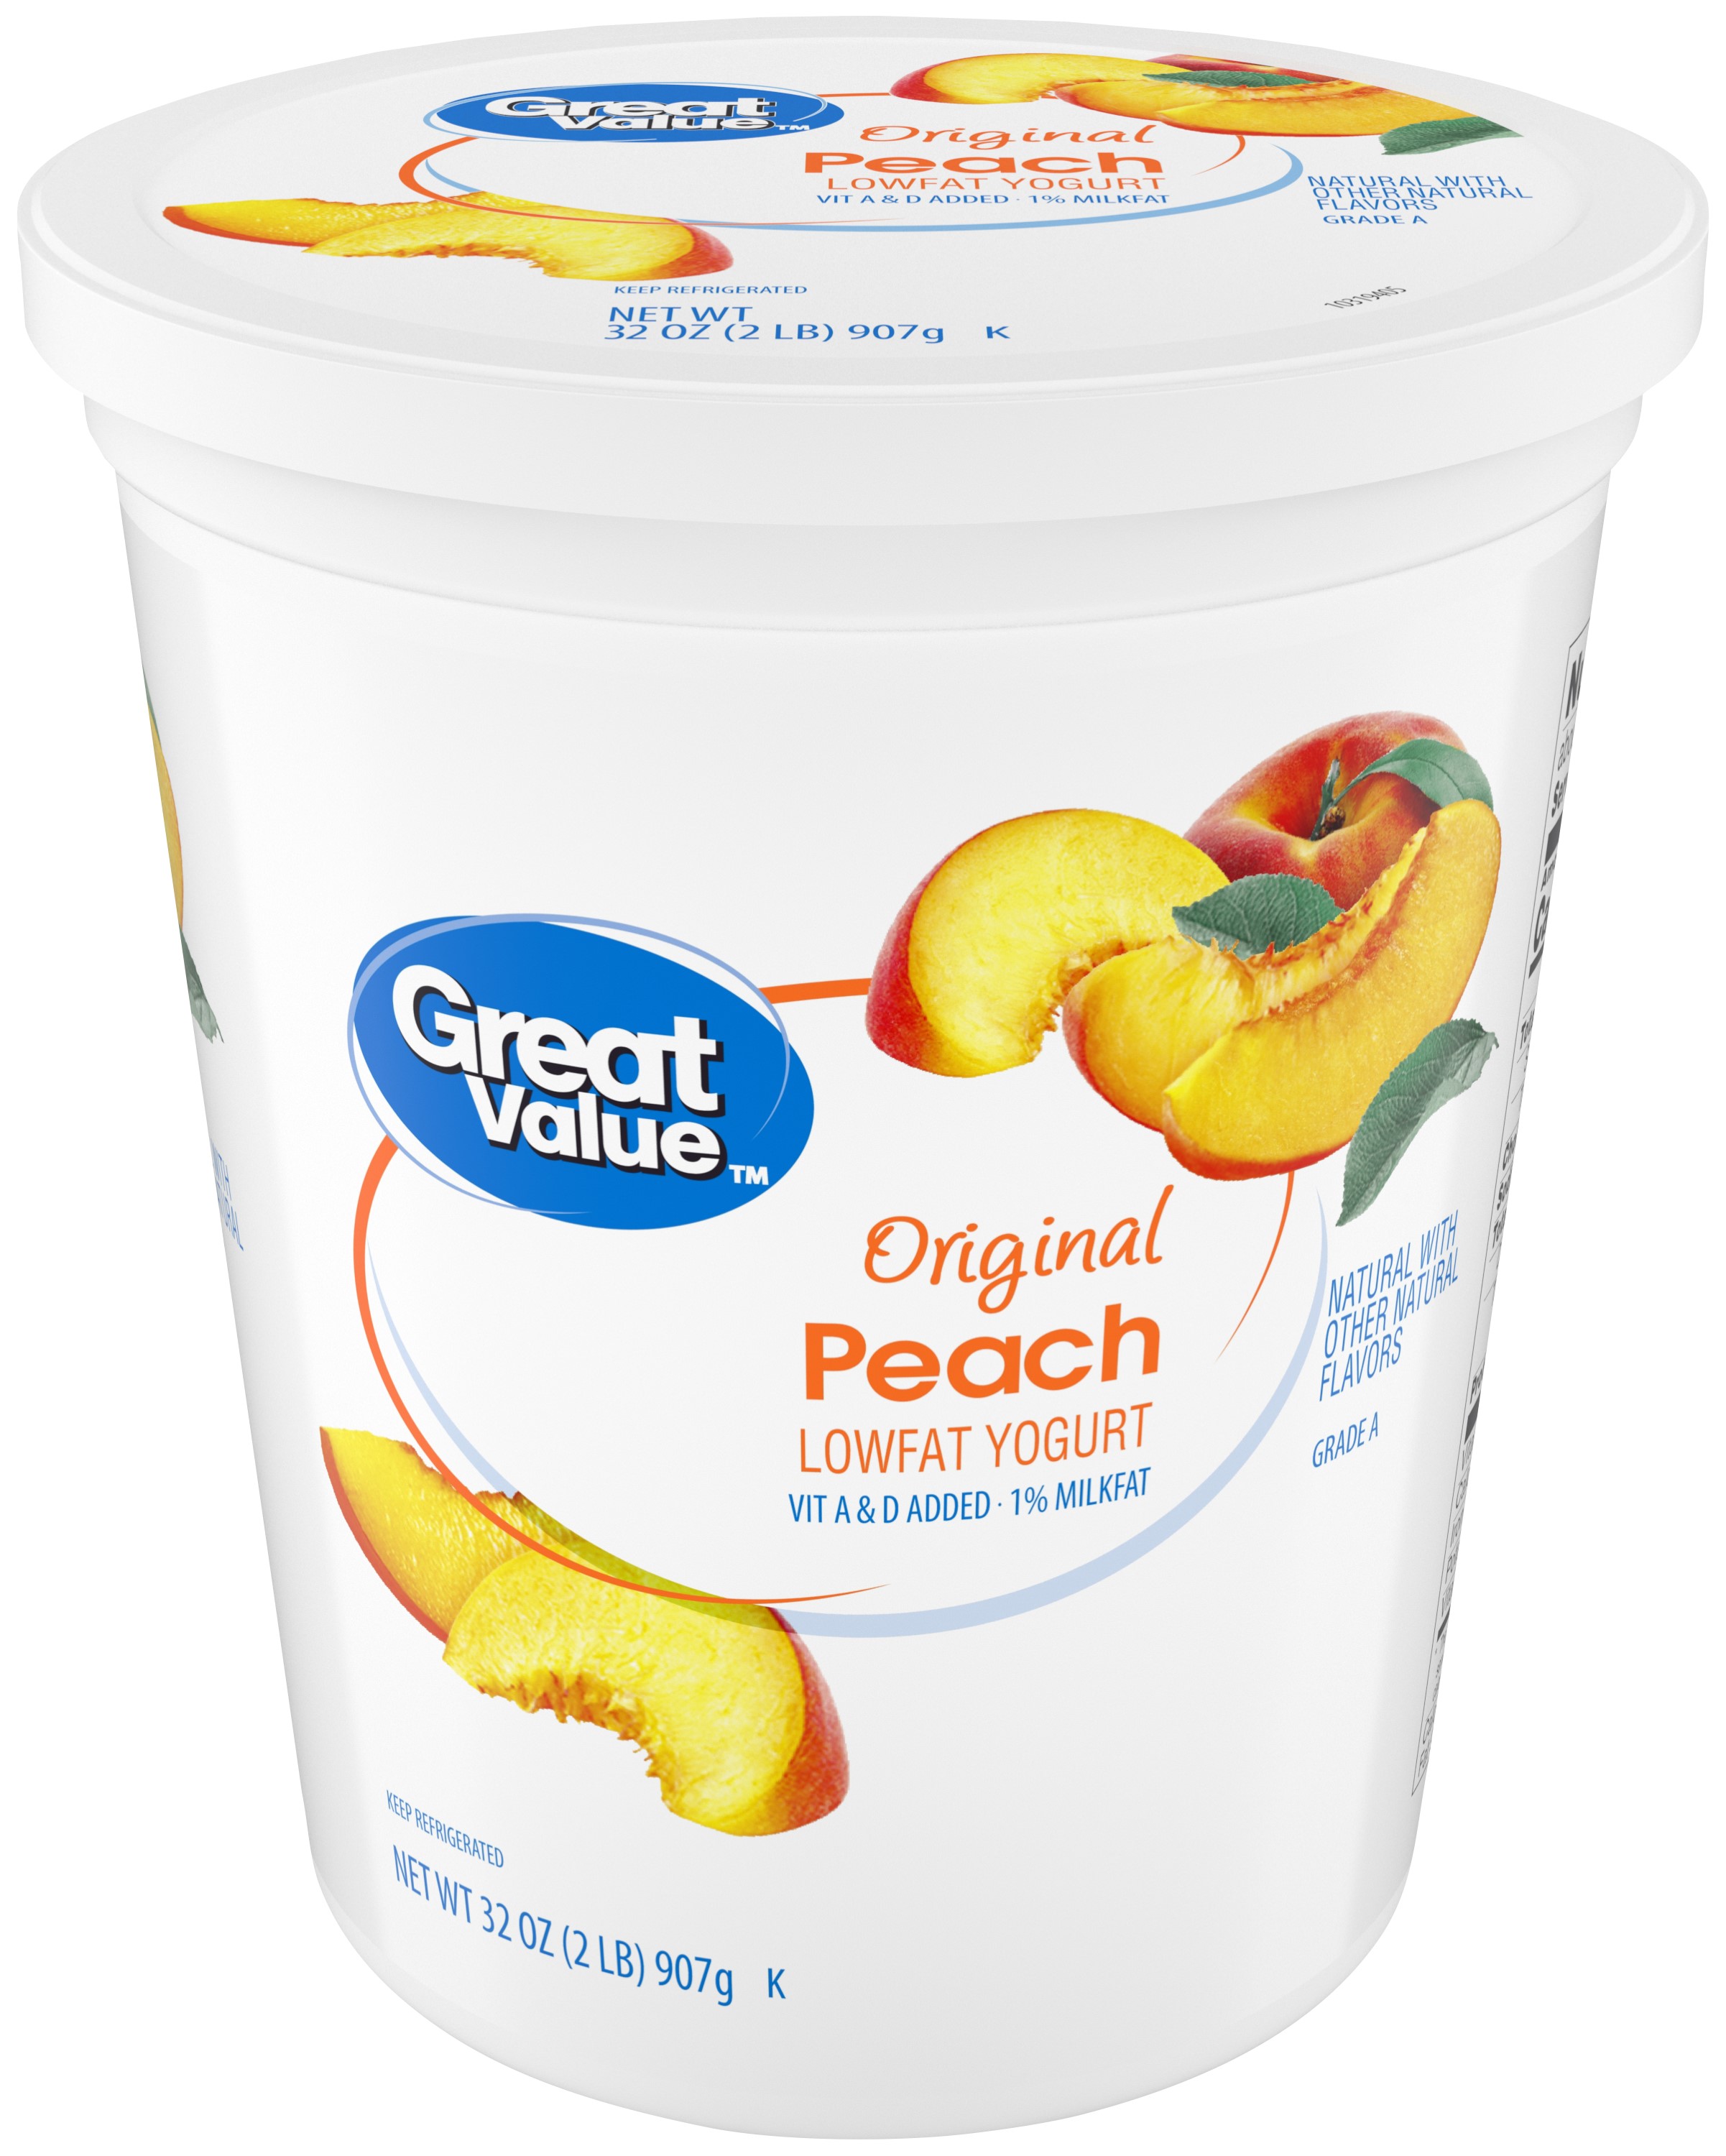 Great Value Original Peach Lowfat Yogurt, 32 Oz Image